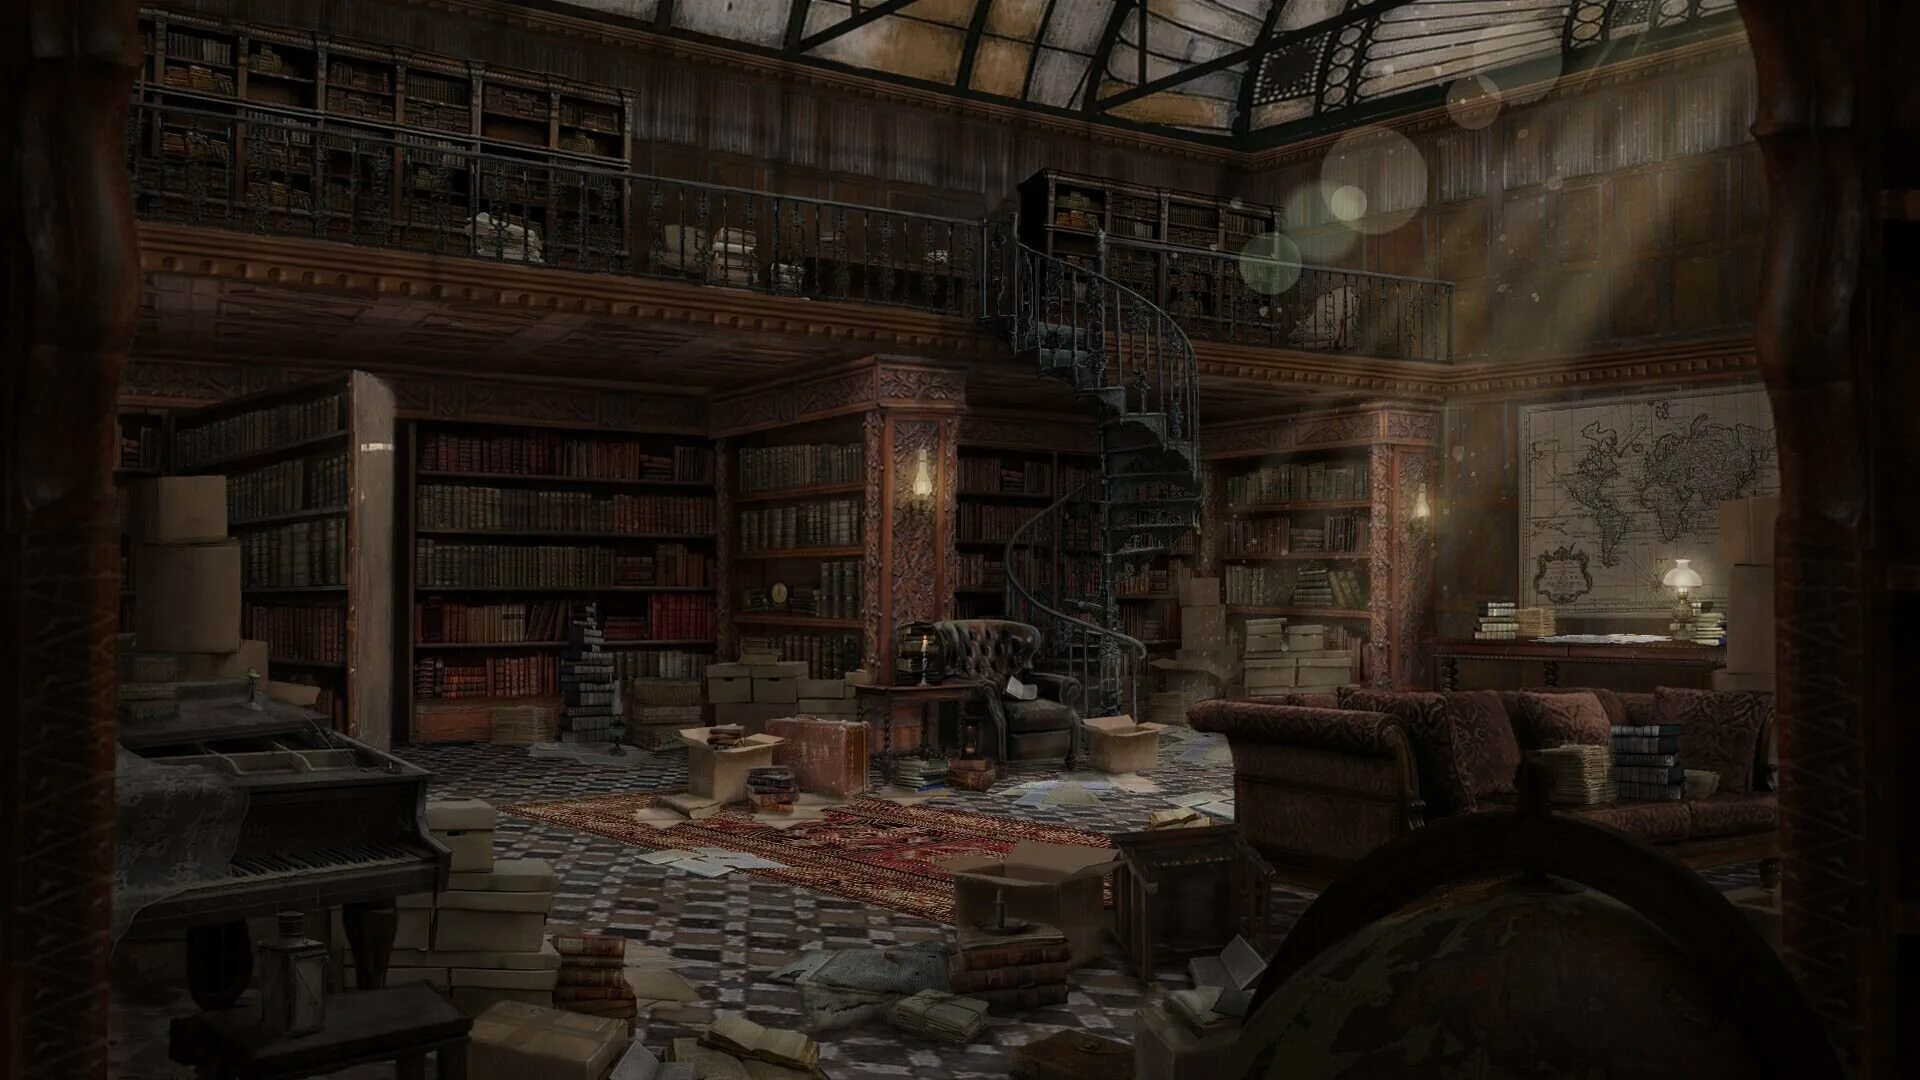 Fantasy worlds электронная библиотека. Библиотека арт. Старинная библиотека. Заброшенная библиотека. Старая заброшенная библиотека.